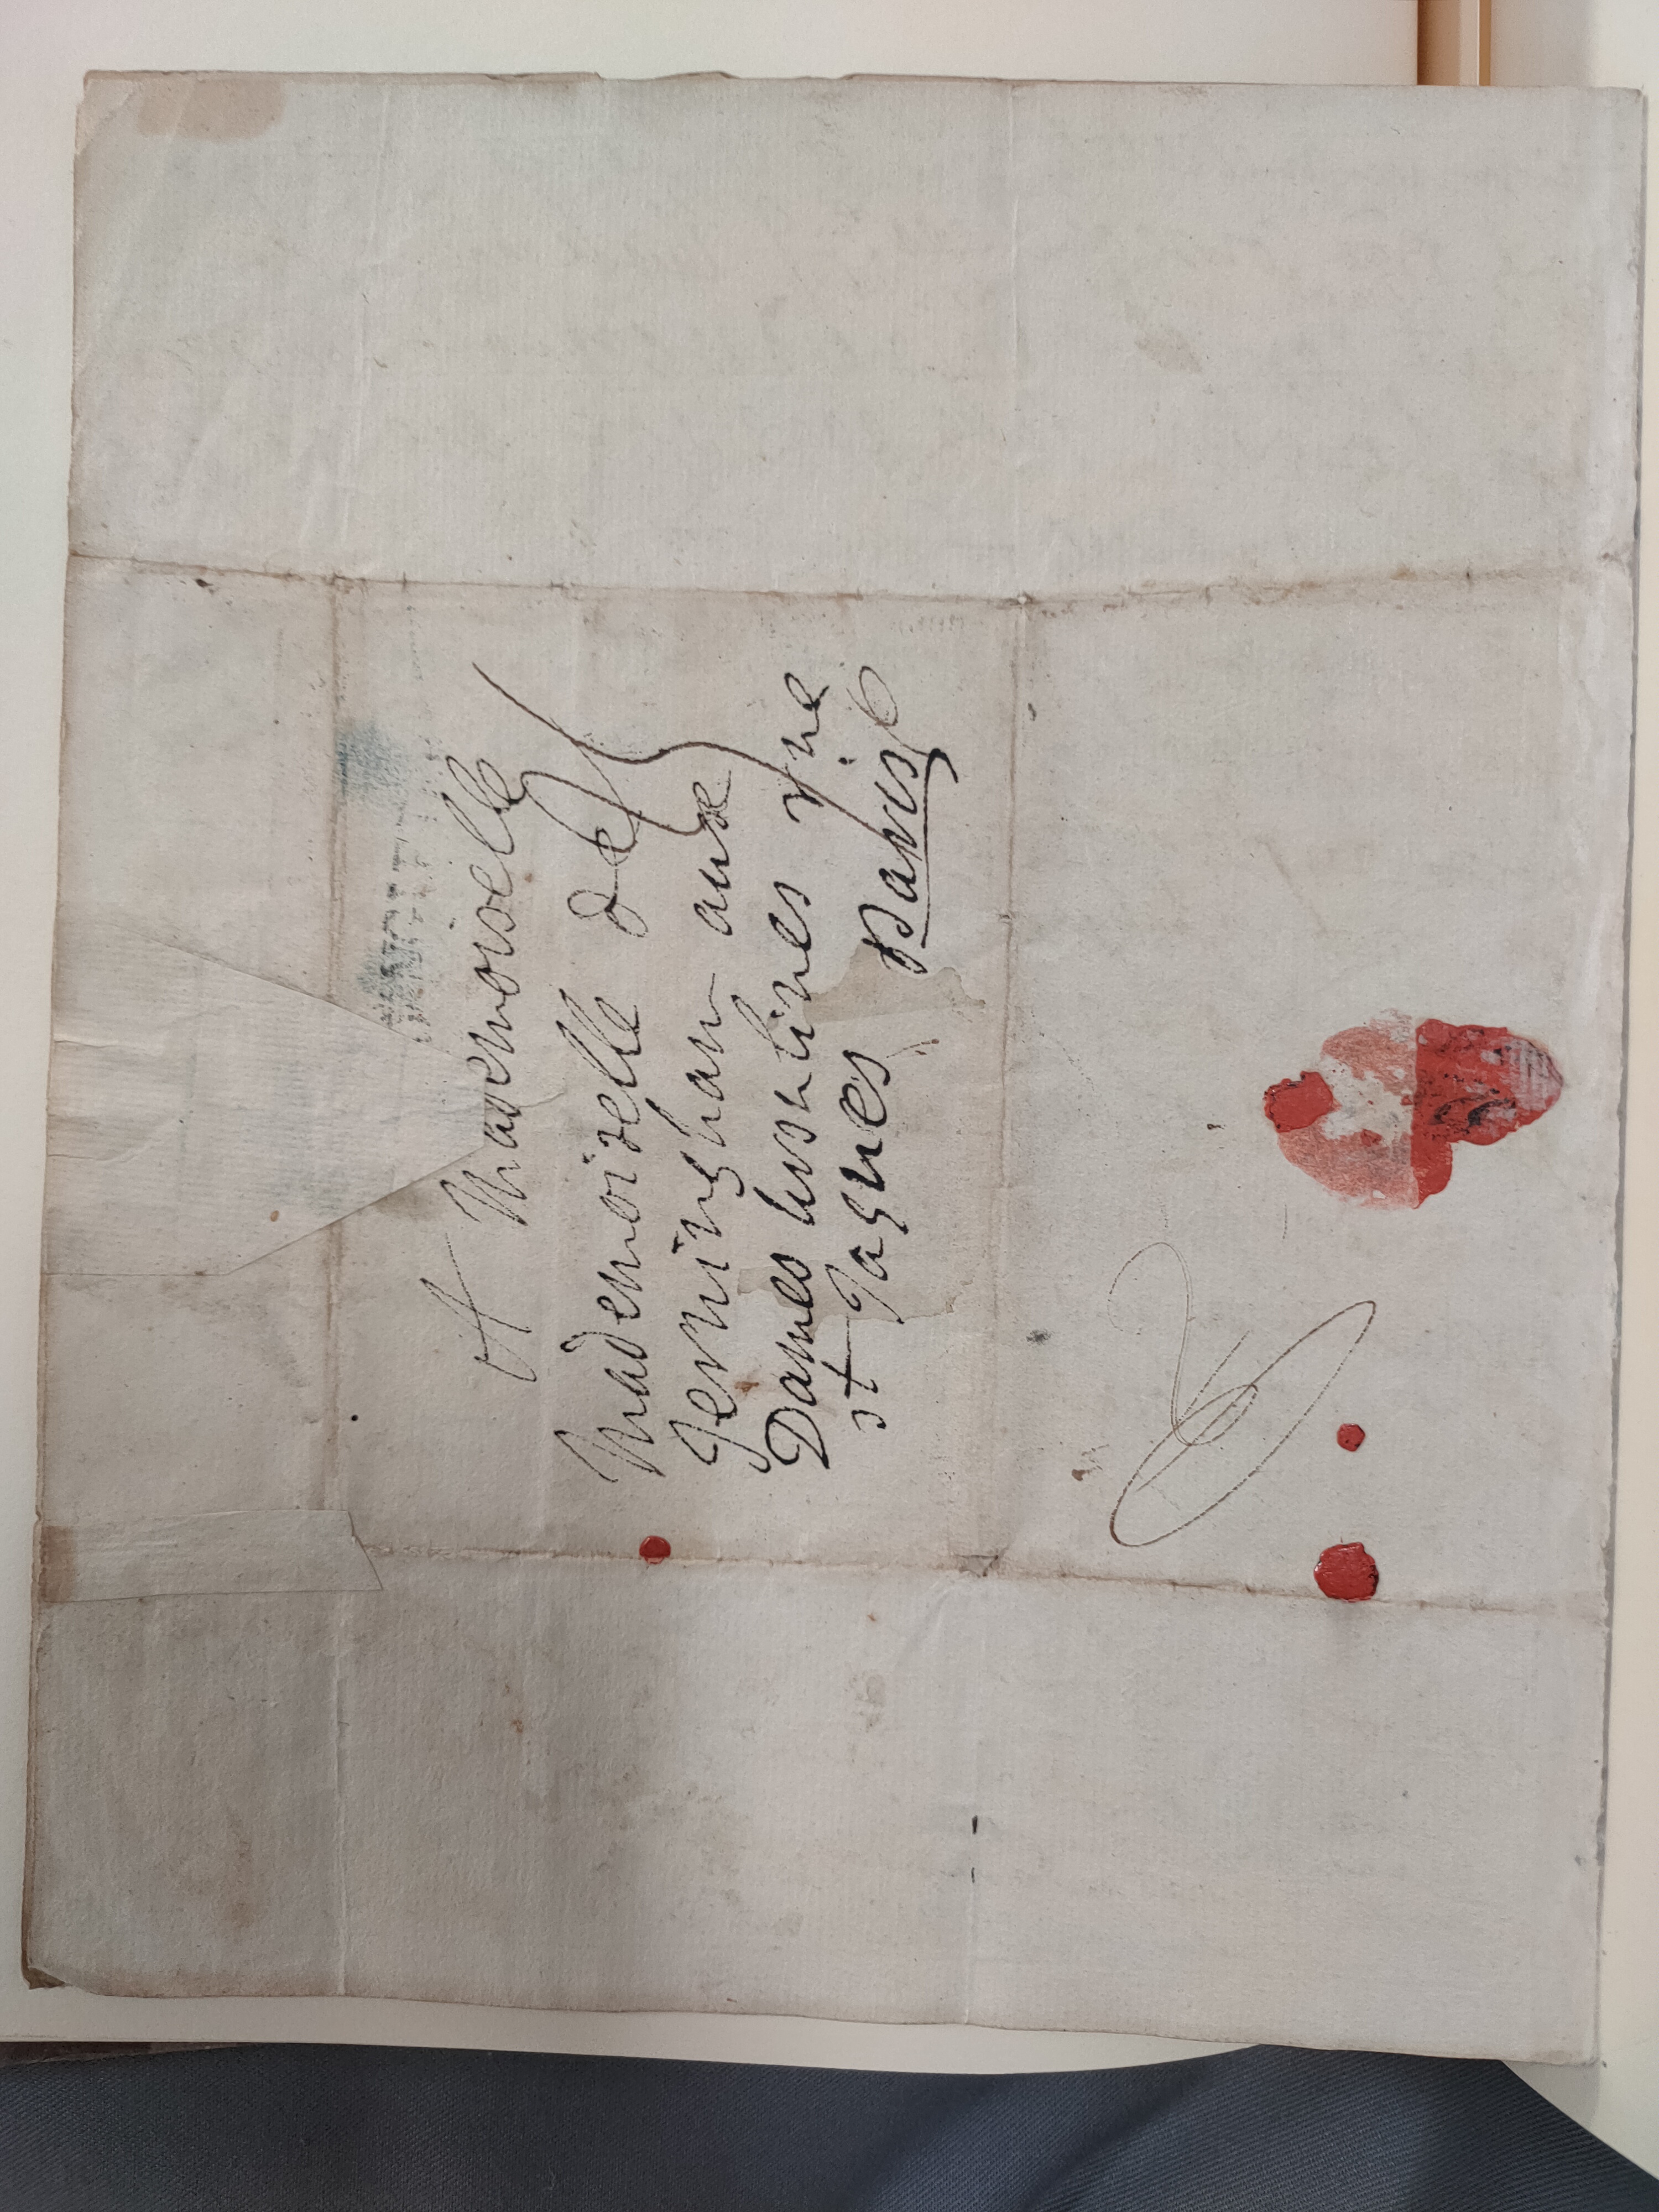 Image #4 of letter: Edward Jerningham (the poet) to Charlotte Jerningham, 13 June 1785